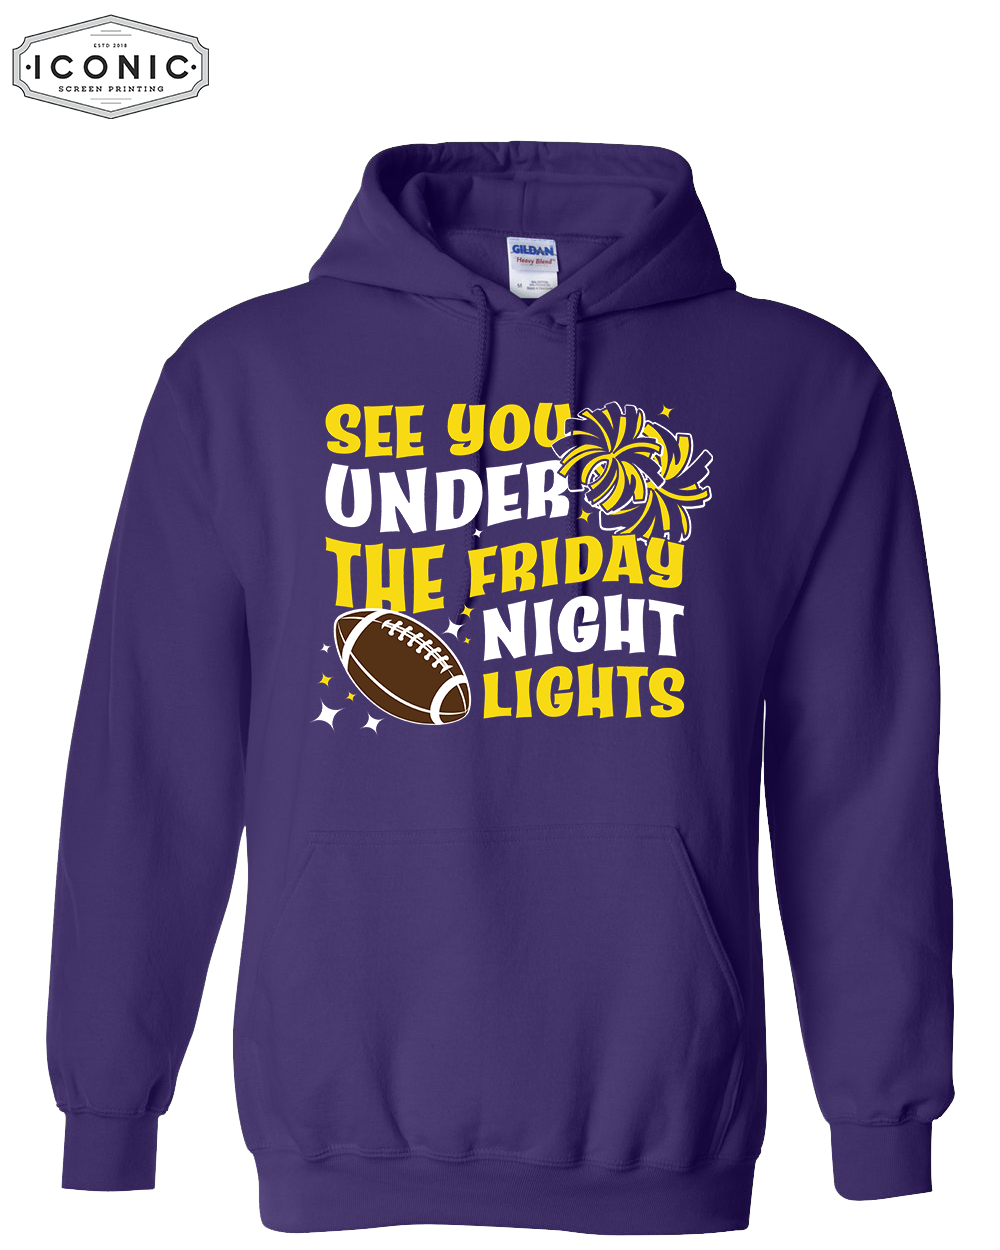 Friday Night Lights - Heavy Blend Hooded Sweatshirt